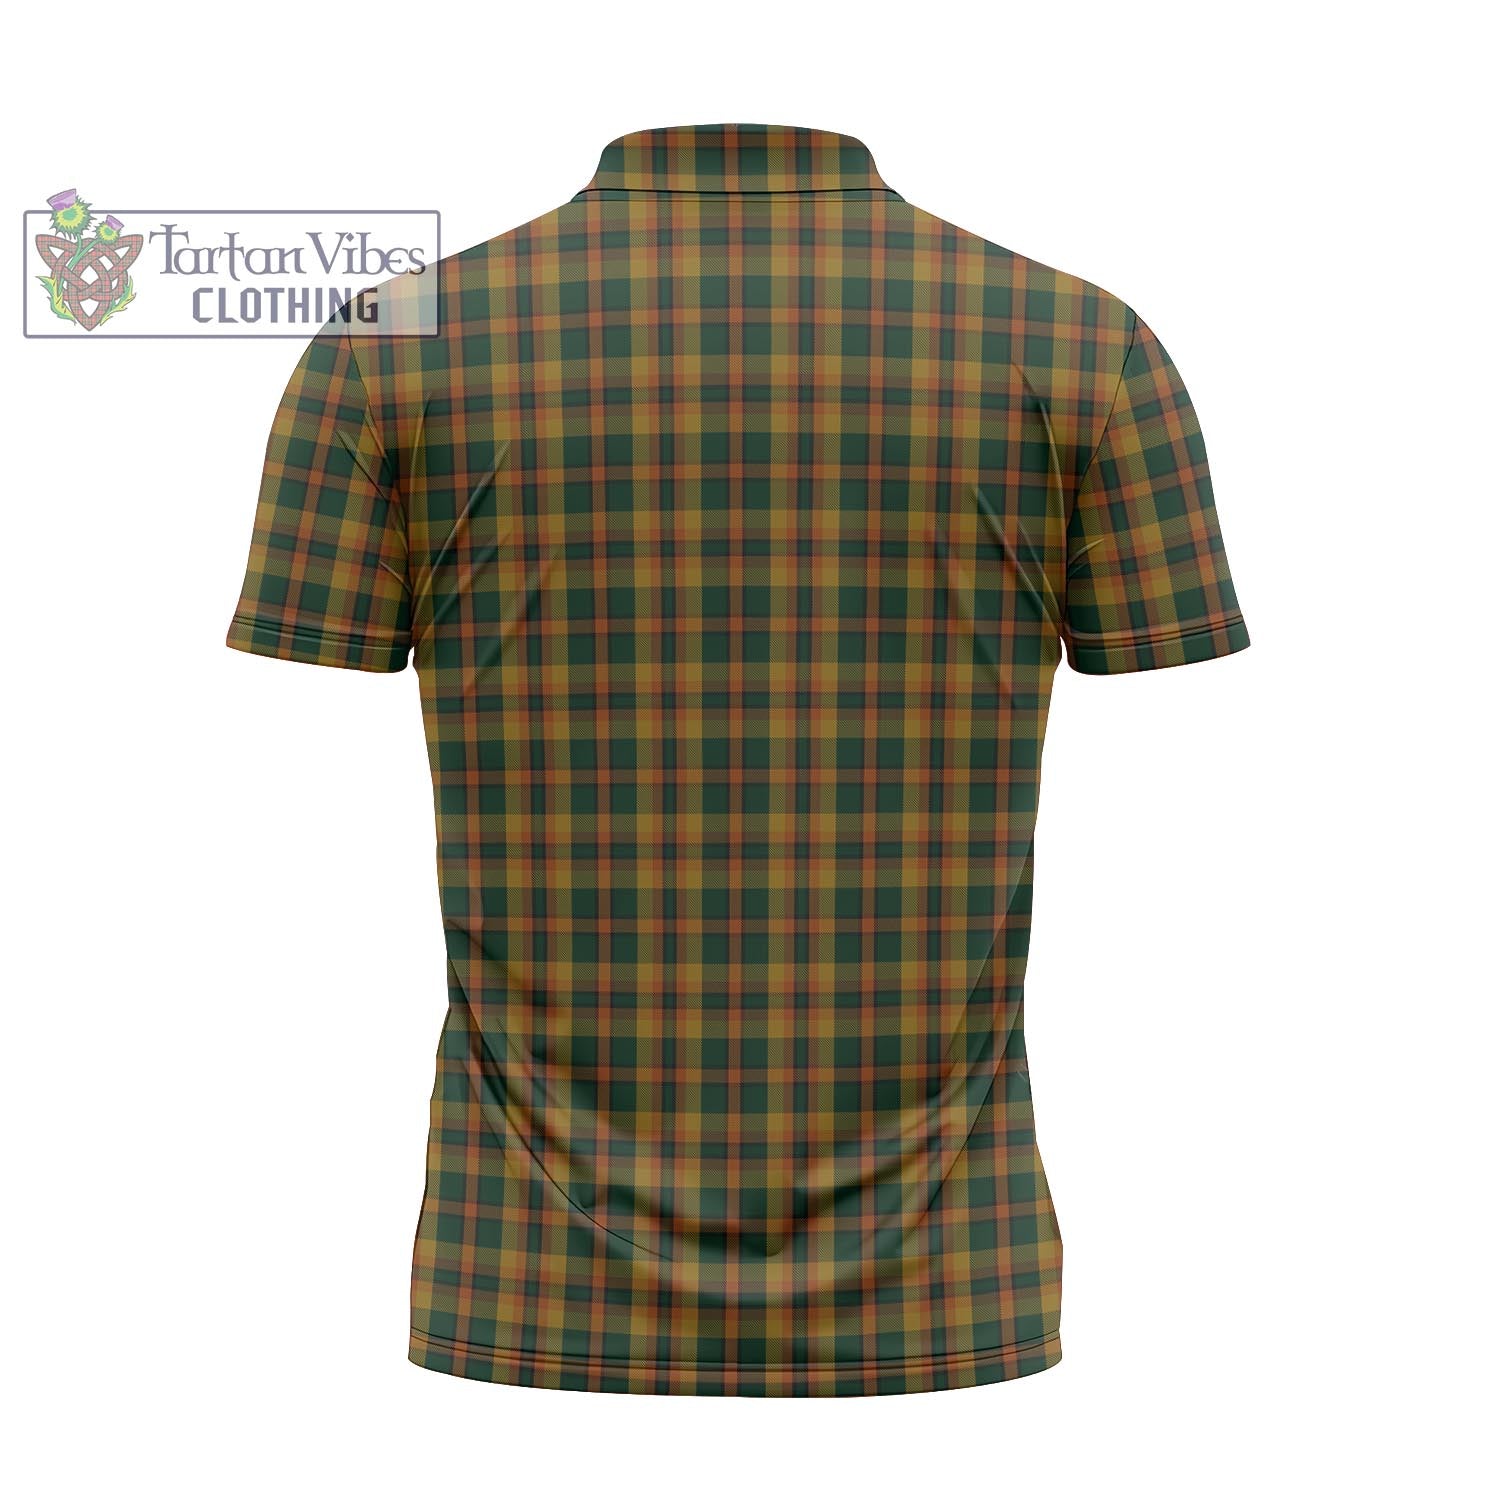 Tartan Vibes Clothing Londonderry (Derry) County Ireland Tartan Zipper Polo Shirt